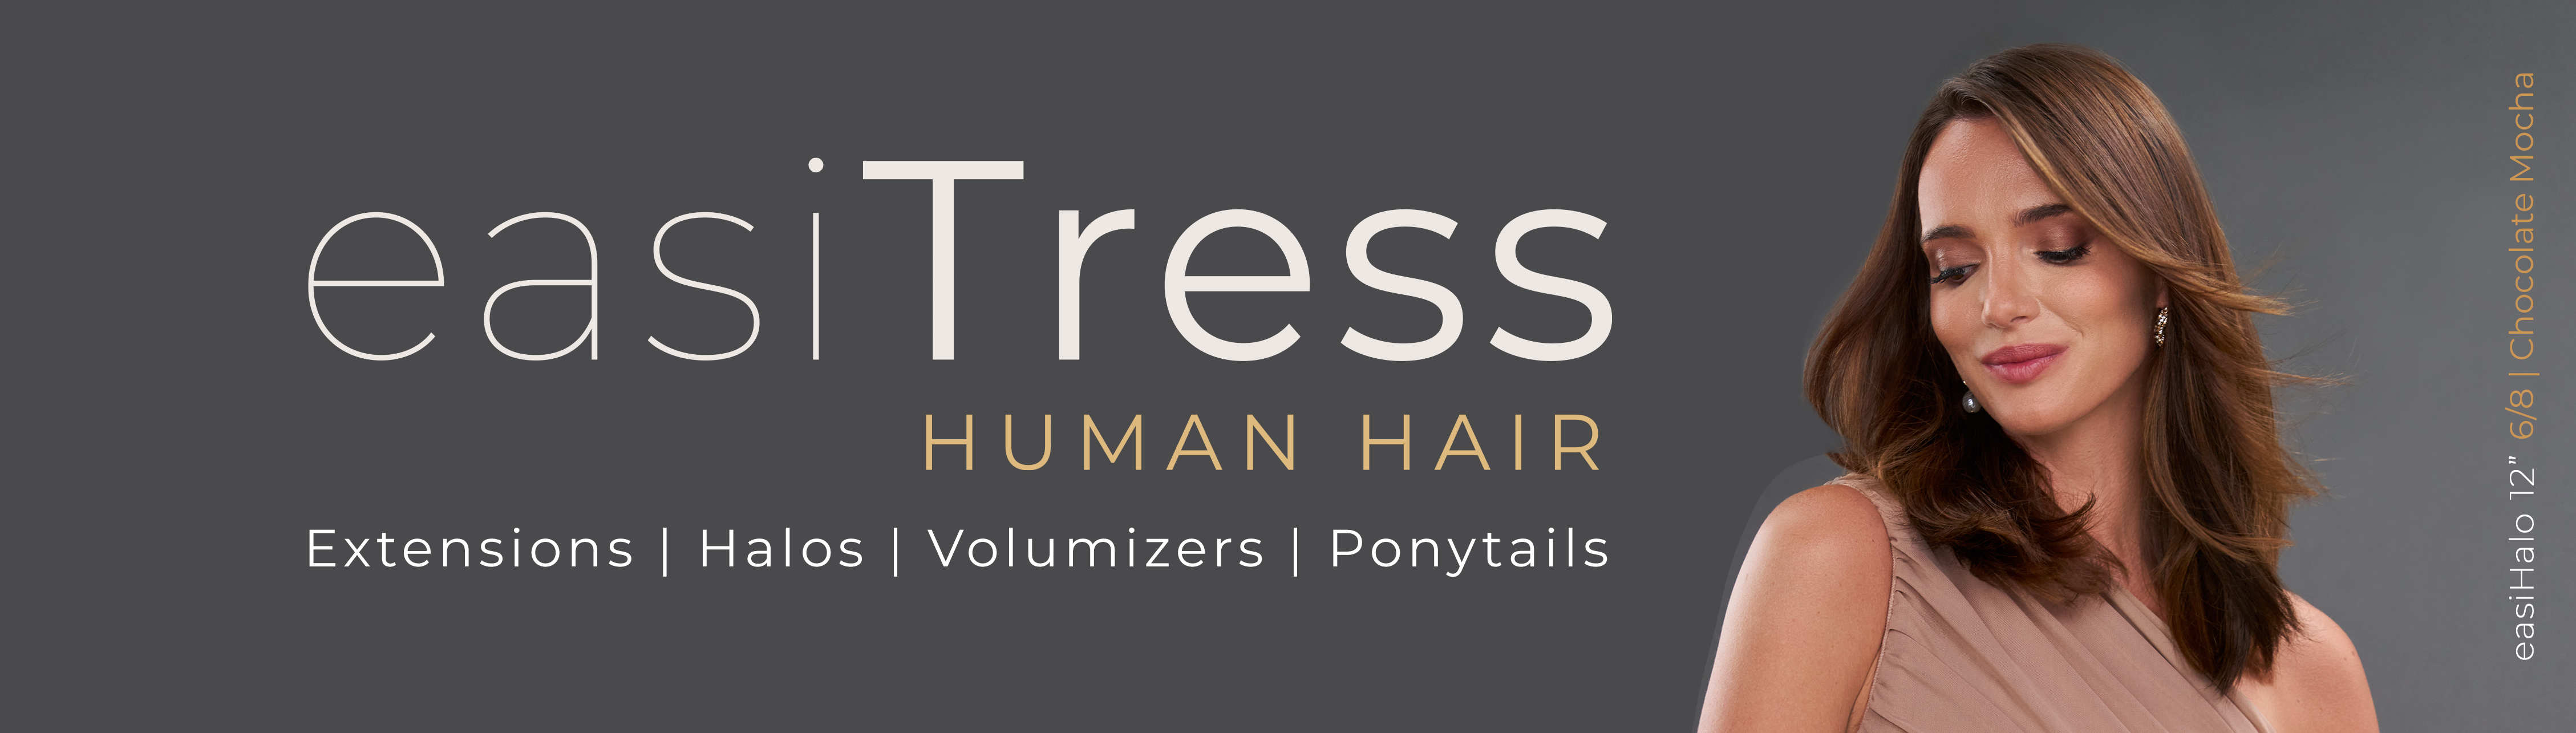 easiTress Human Hair - Extensions | Halos | Volumizers | Ponytails